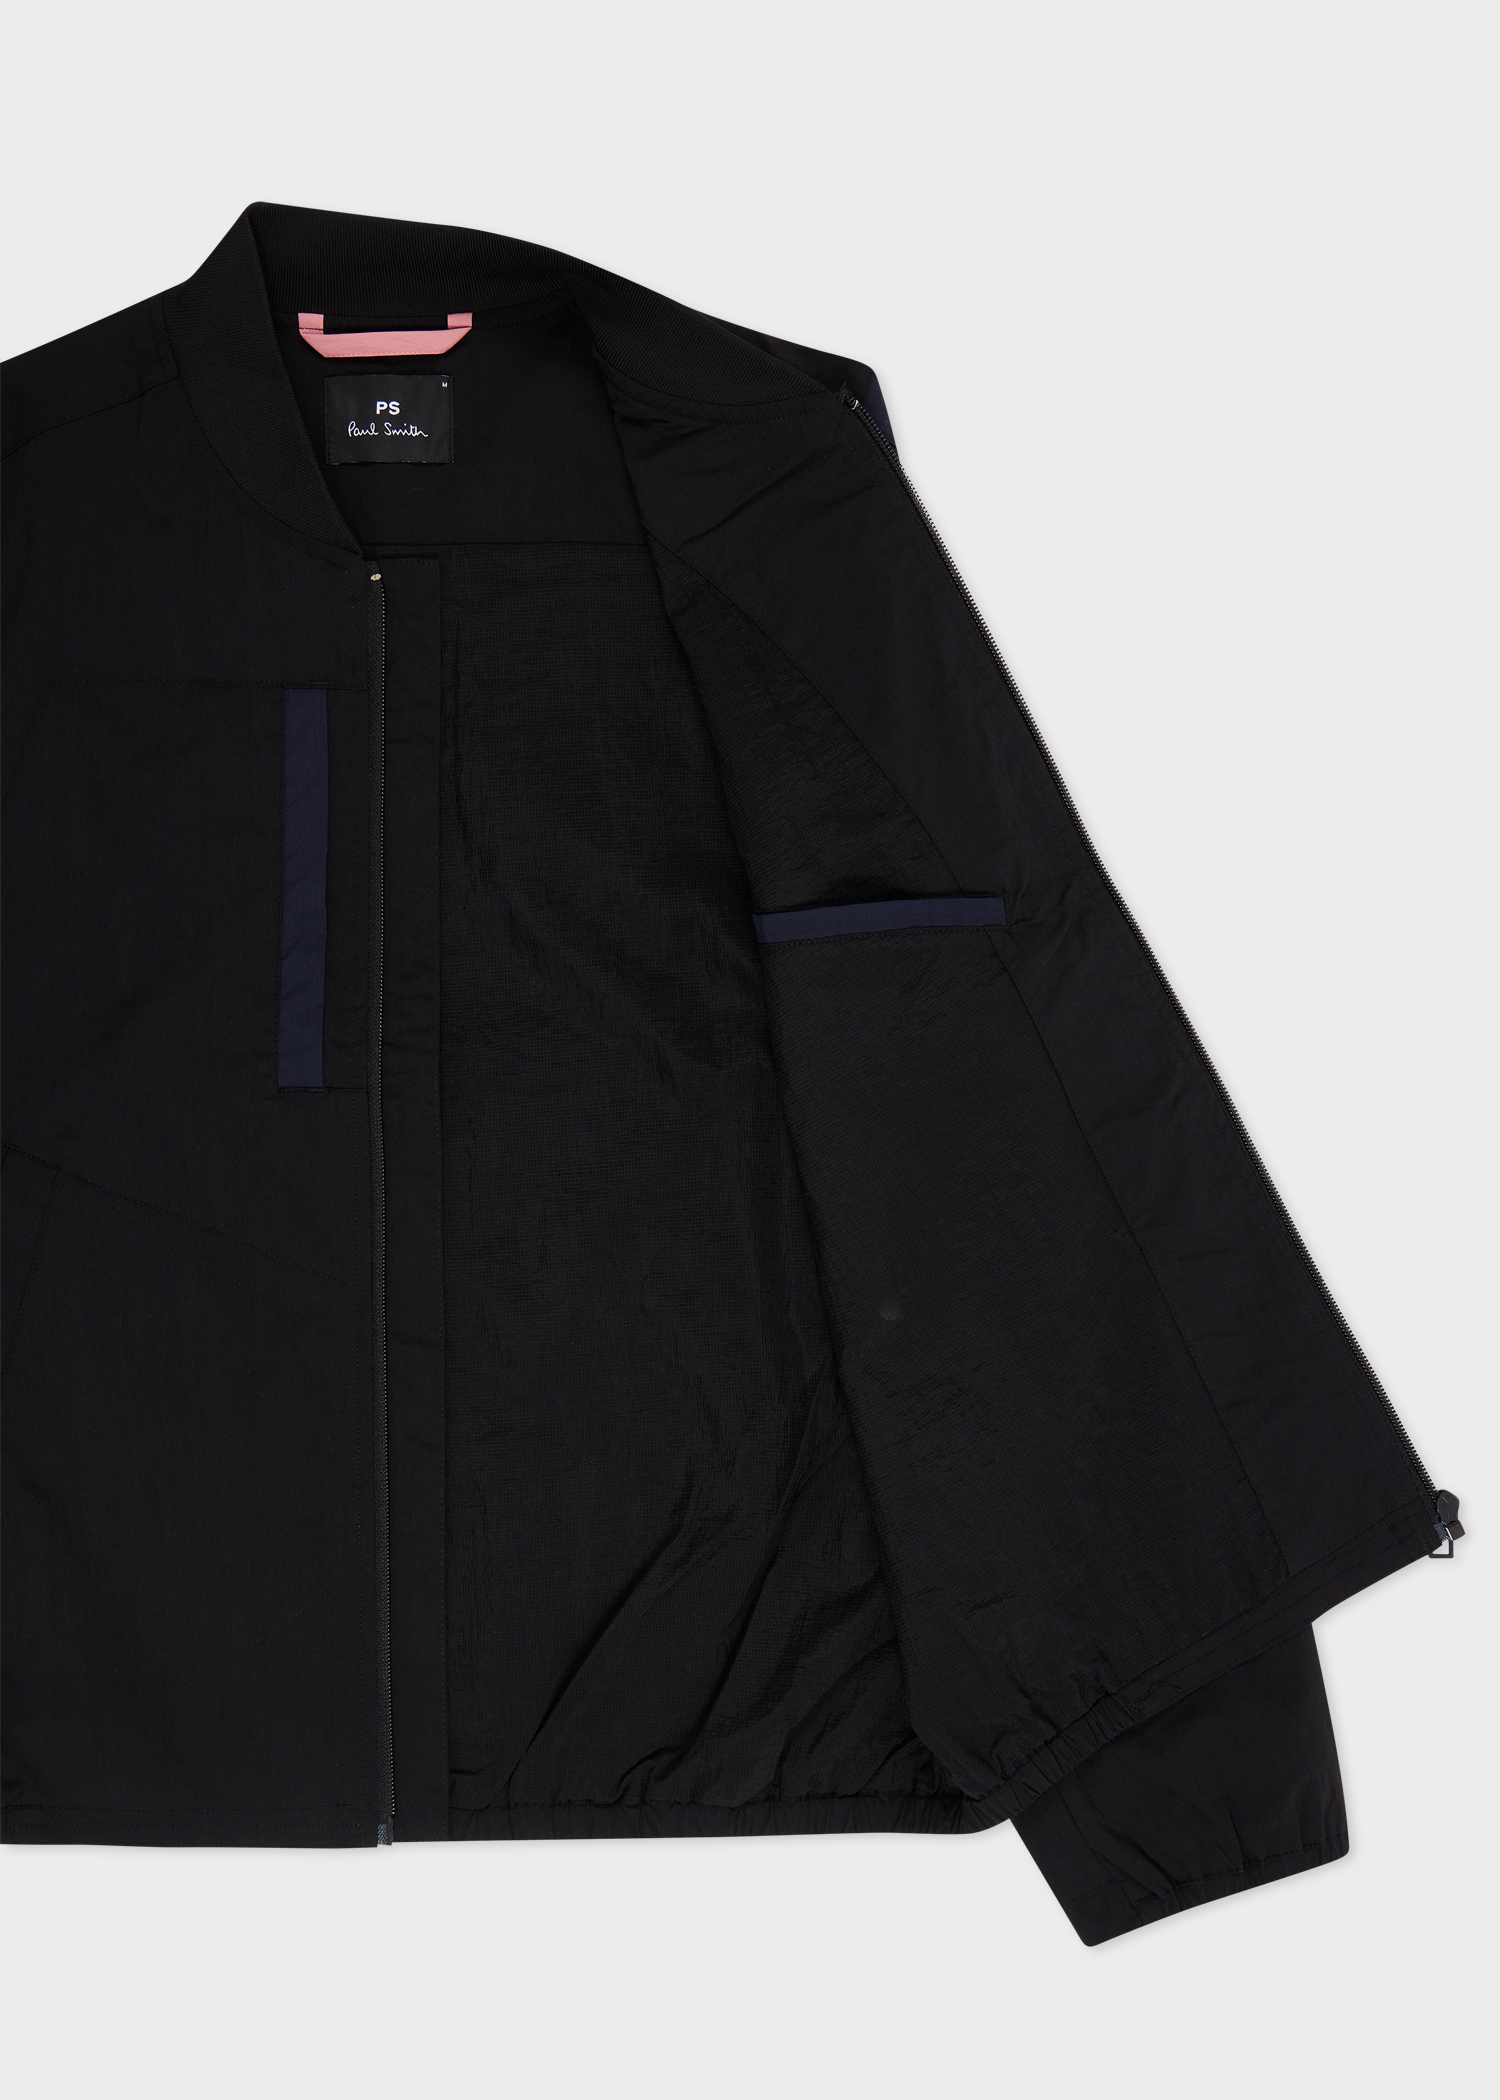 Men's Black Cotton-Nylon Bomber Jacket